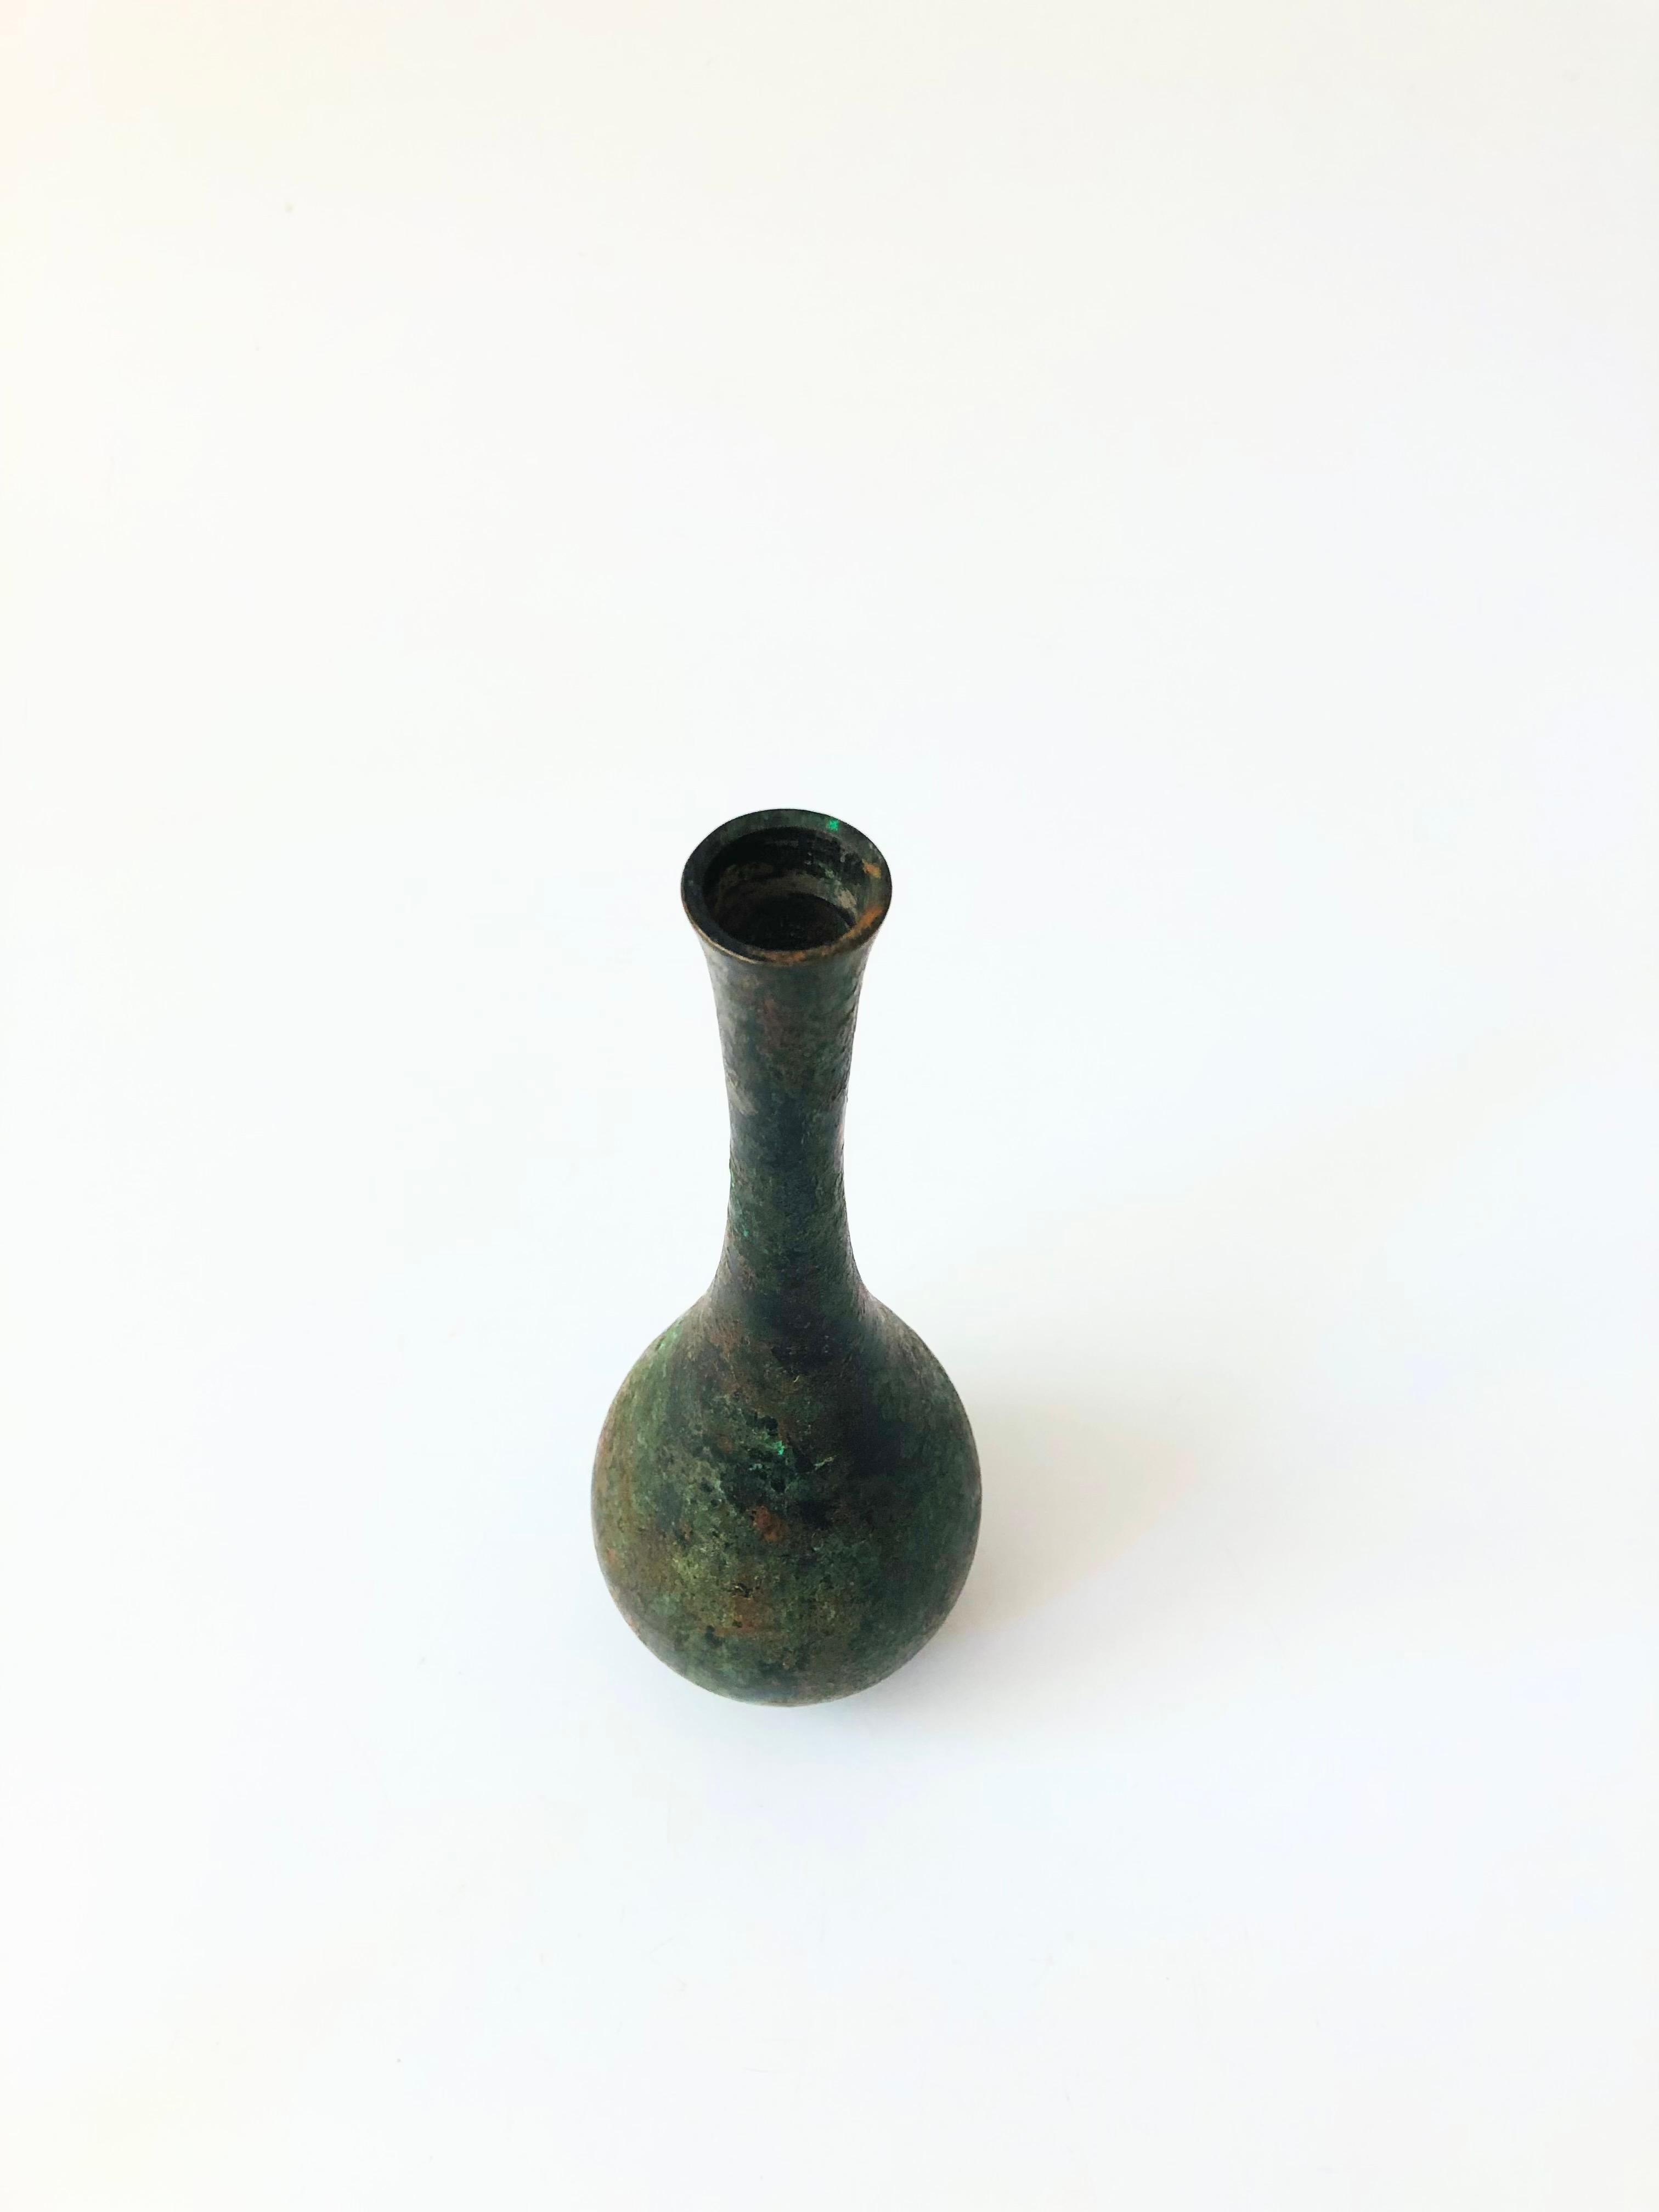 A vintage Japanese Takaoka Doki verdigris bronze vase. Beautiful variation between the green and bronze organic patinated finish.

